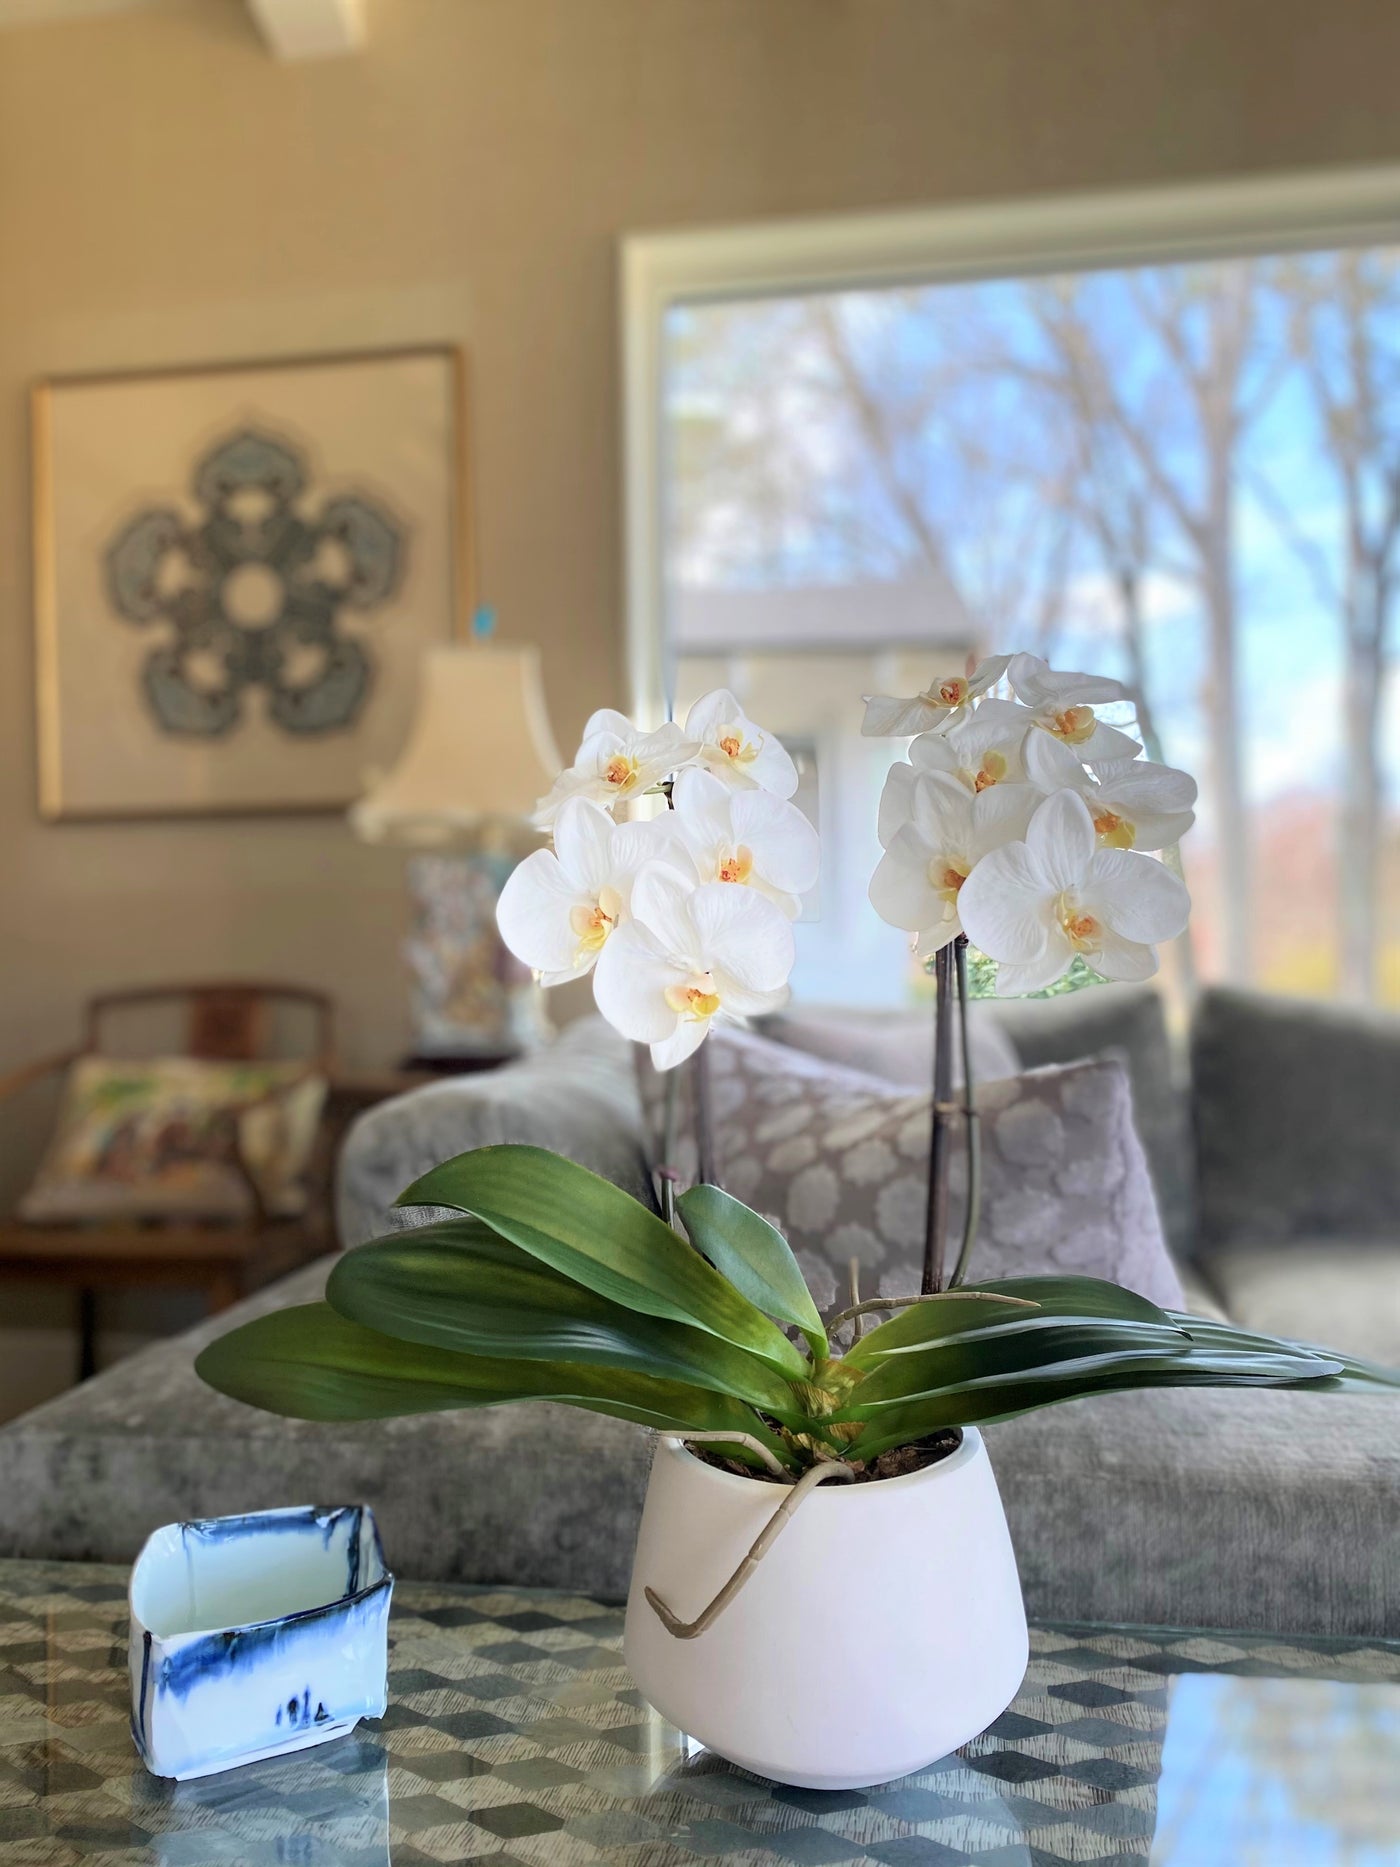 Phalaenopsis Orchid x2 in White Ceramic Vase, 18"H - White